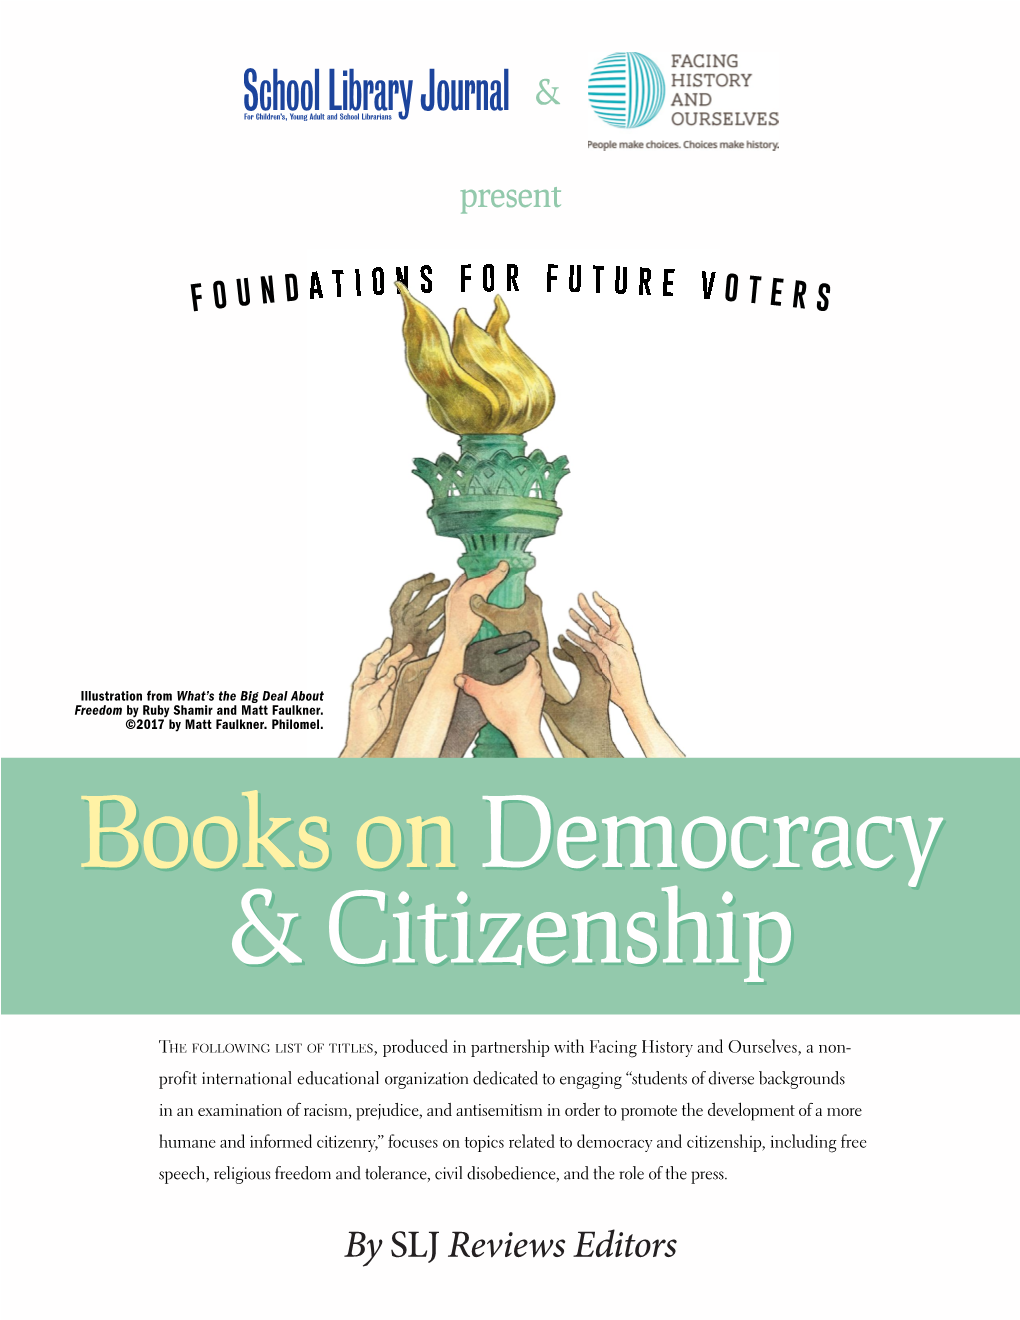 Books on Democracy & Citizenship